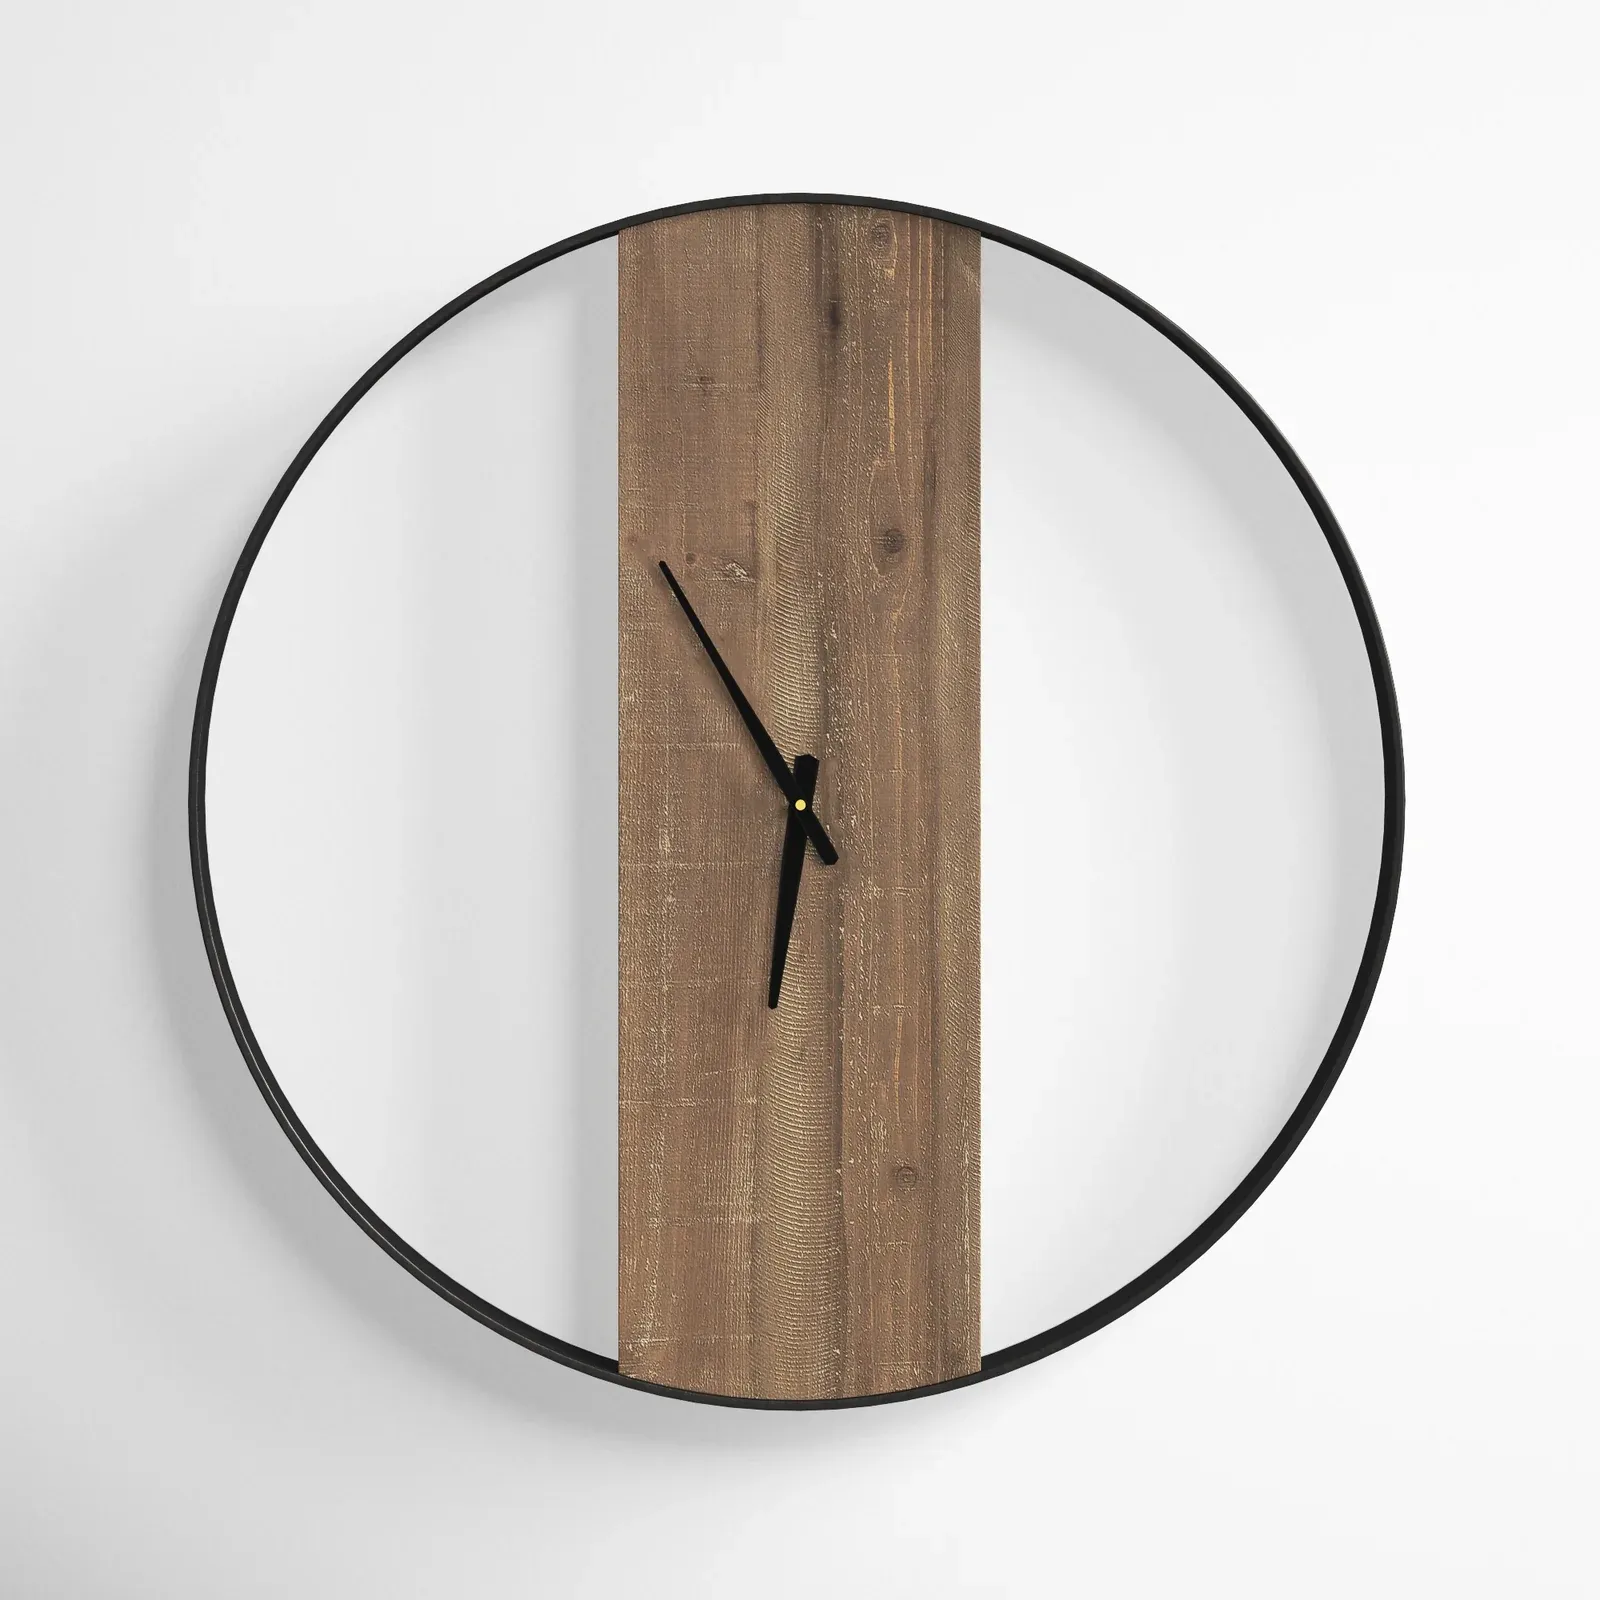 Wholesale China Supplier Retro Creative Interior Decorative Metal Wooden Wall Clock